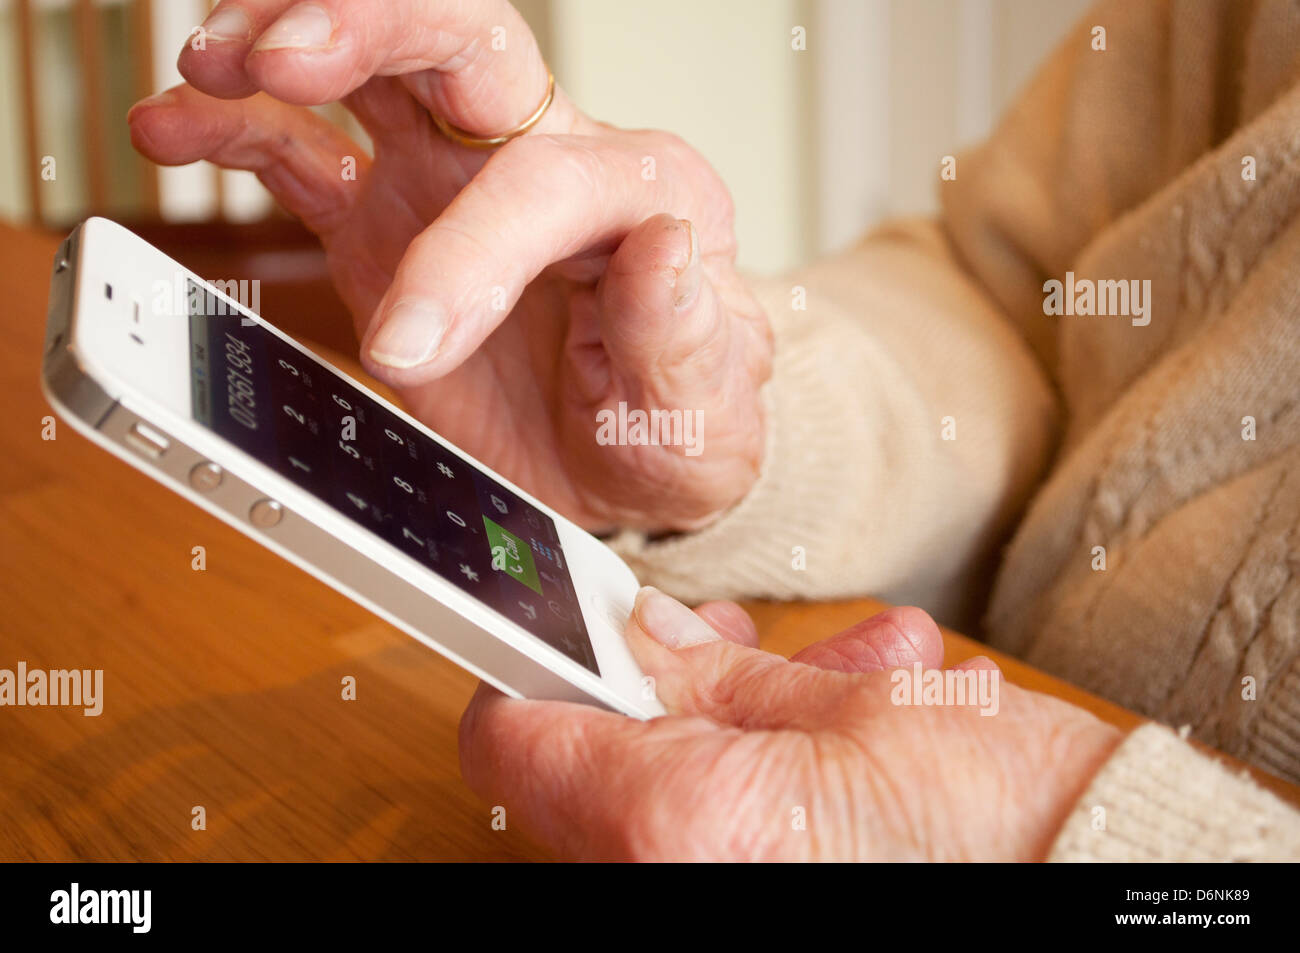 Elderly woman's hands using iPhone Stock Photo